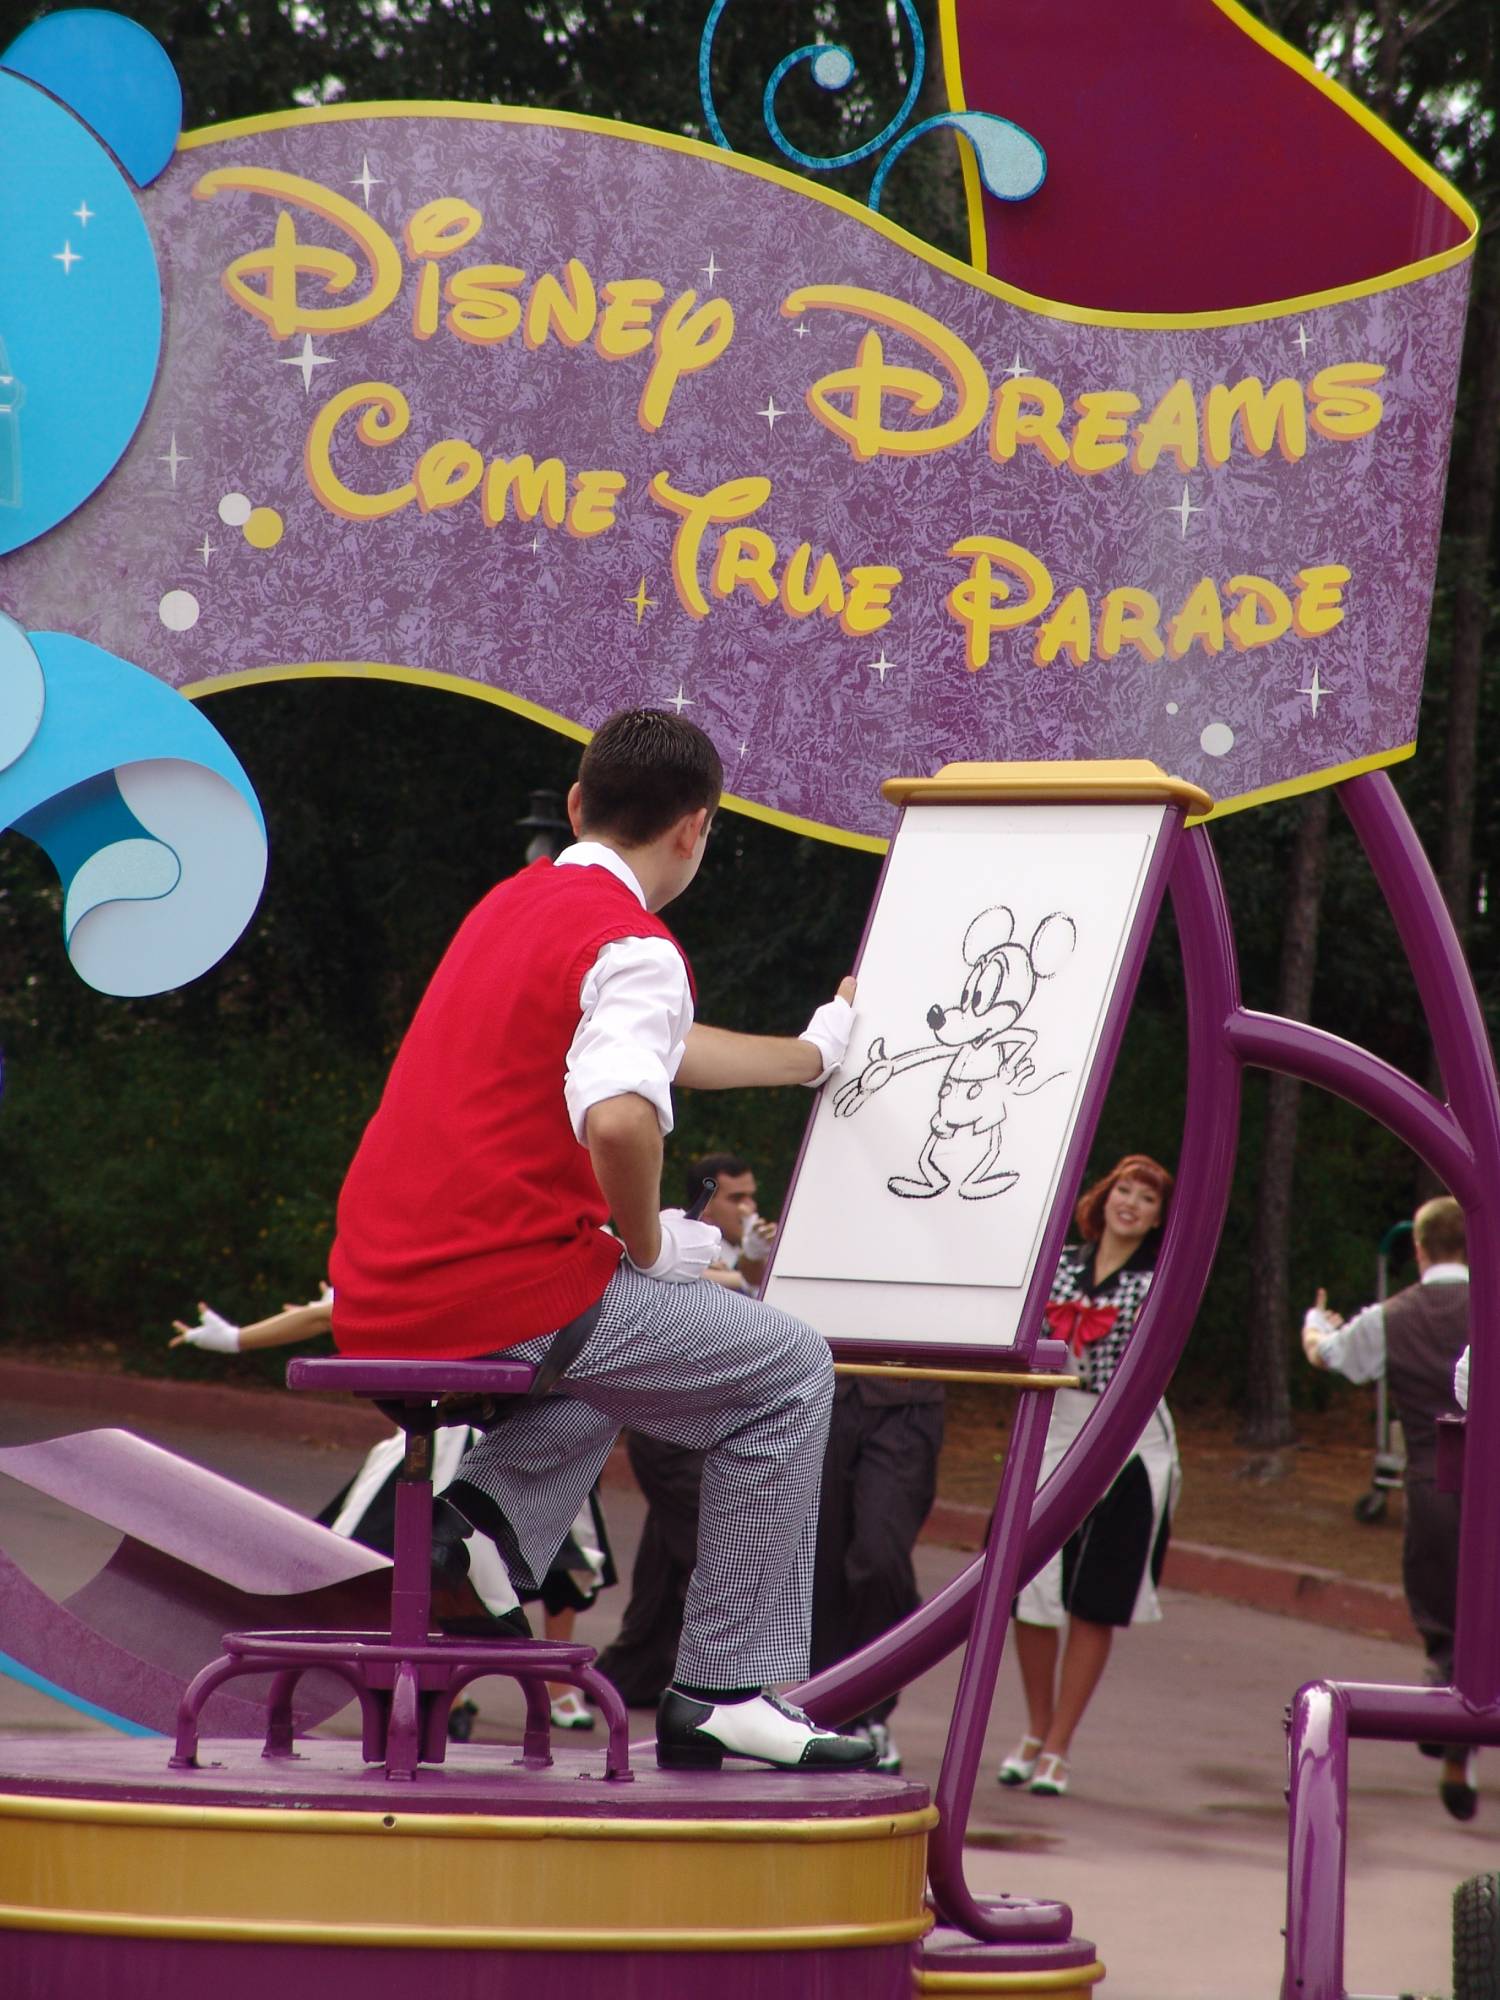 Magic Kingdom - Disney Dreams Come True Parade